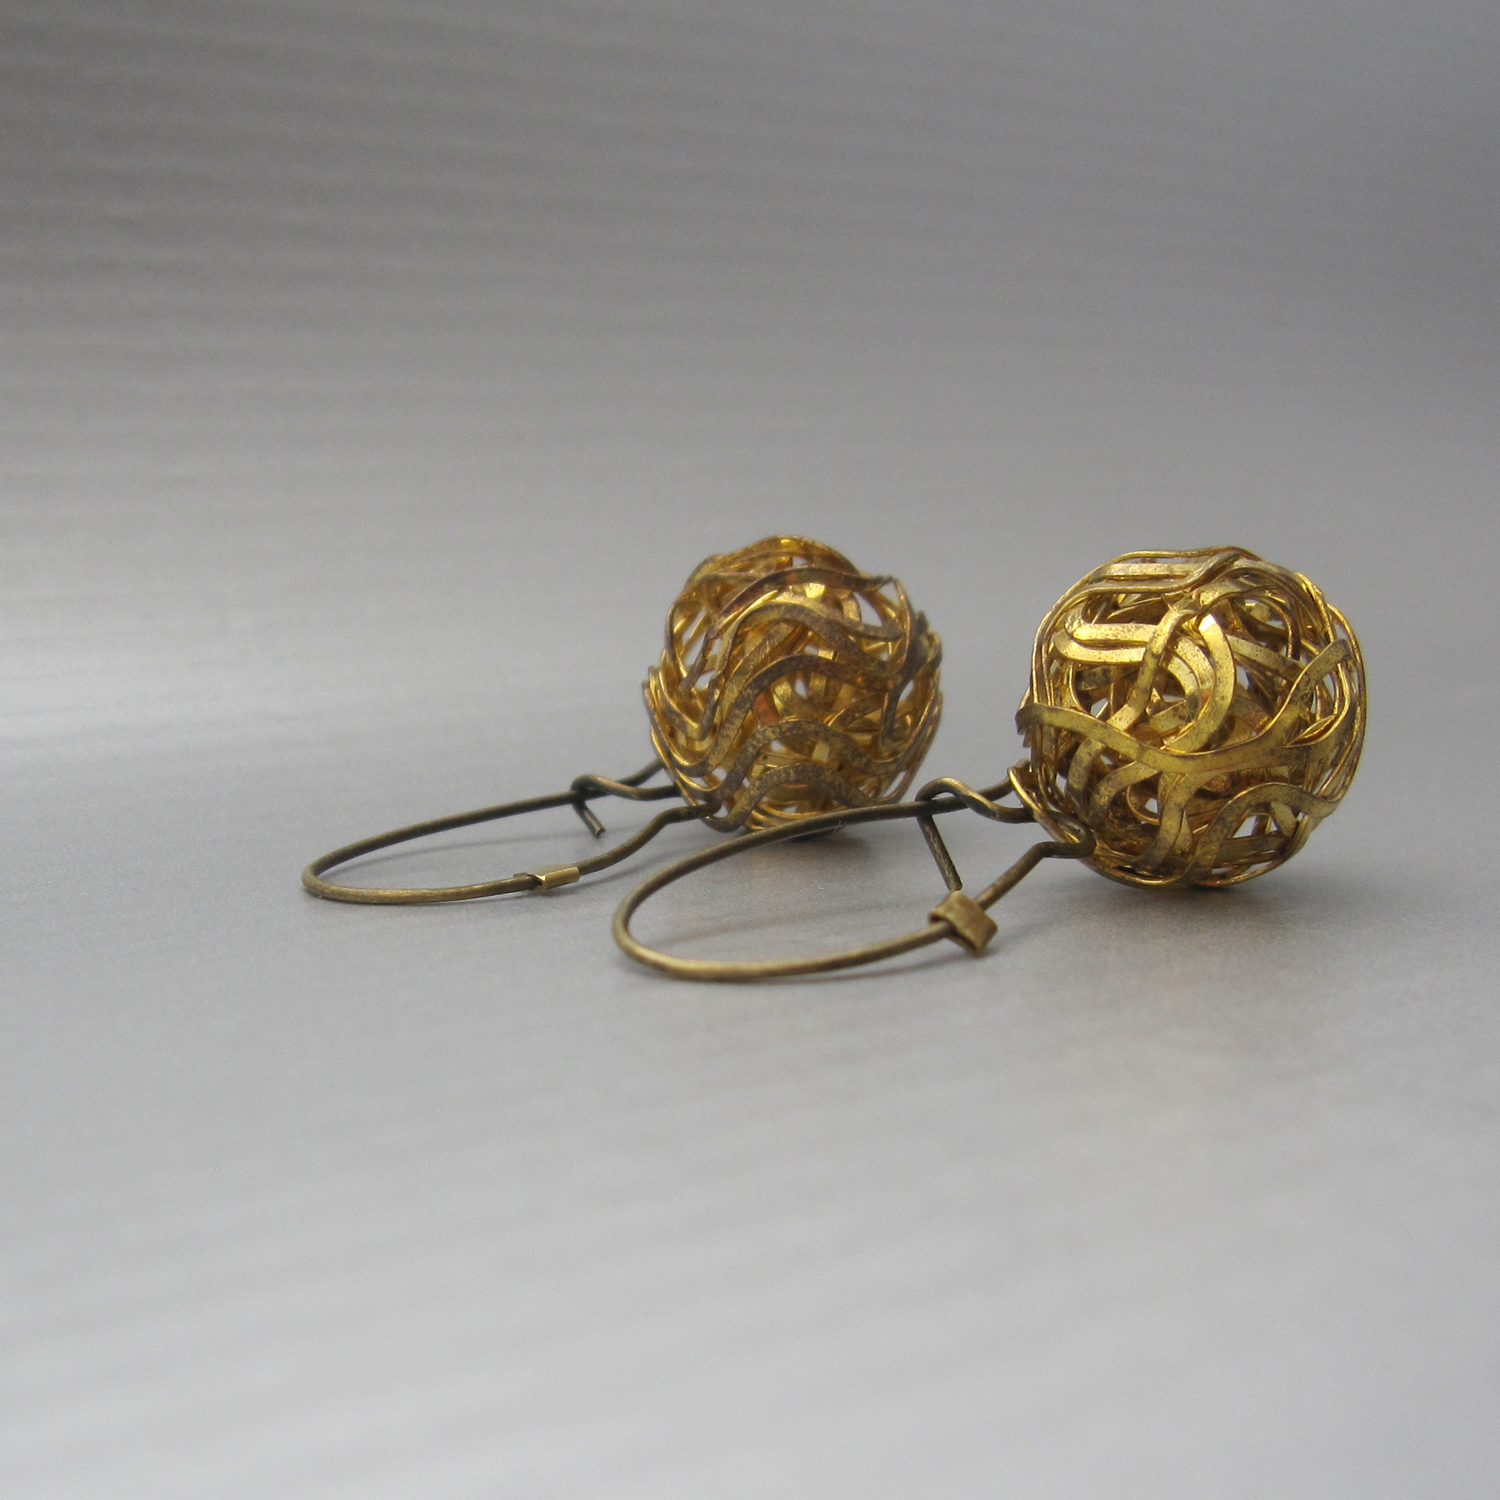  nido di fieno earrings in reclaimed bronze and brass (1.5 in in length) 